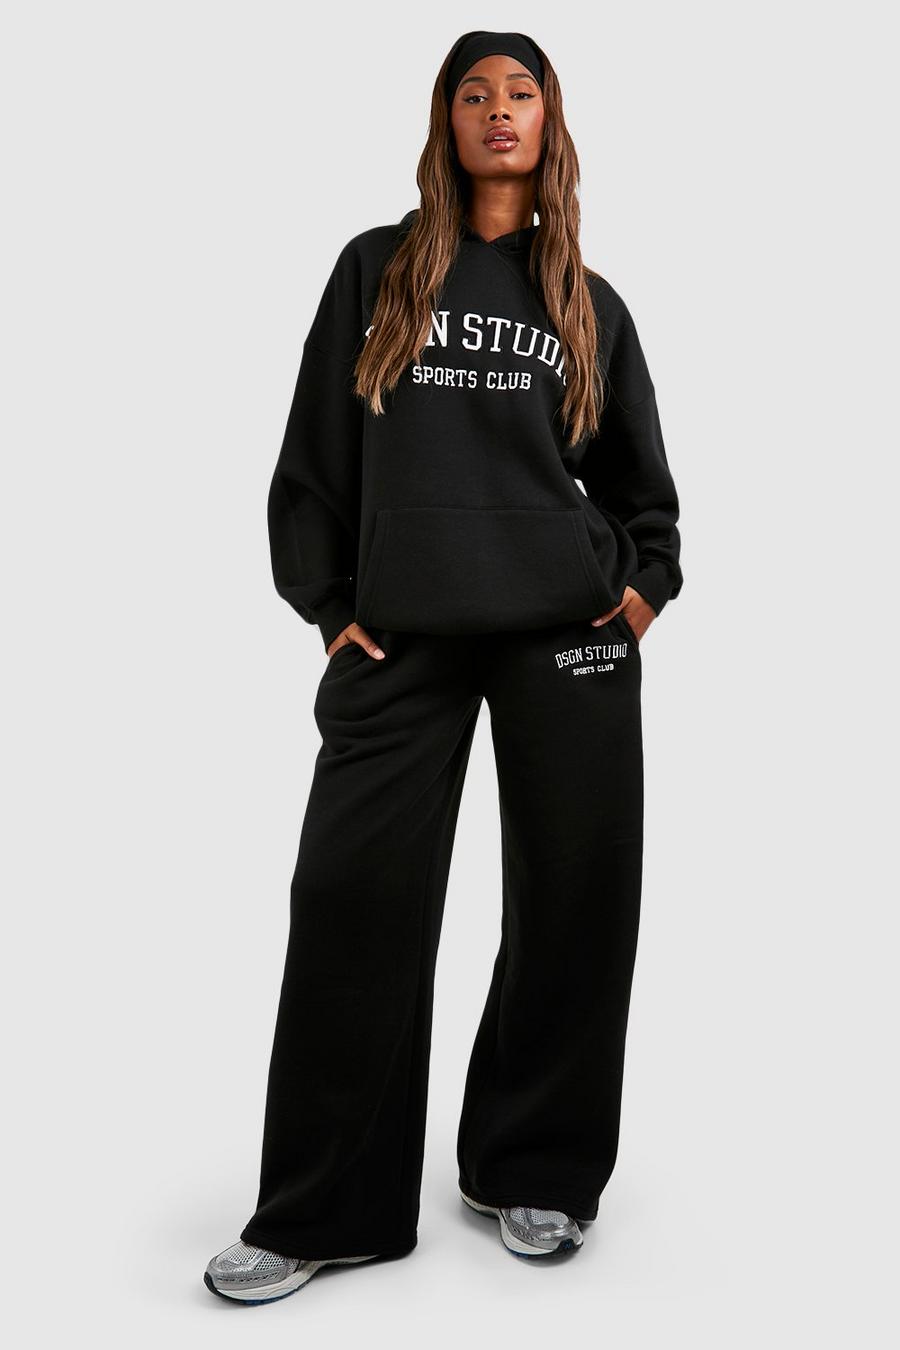 Pantalón deportivo recto con aplique Dsgn Studio, Black